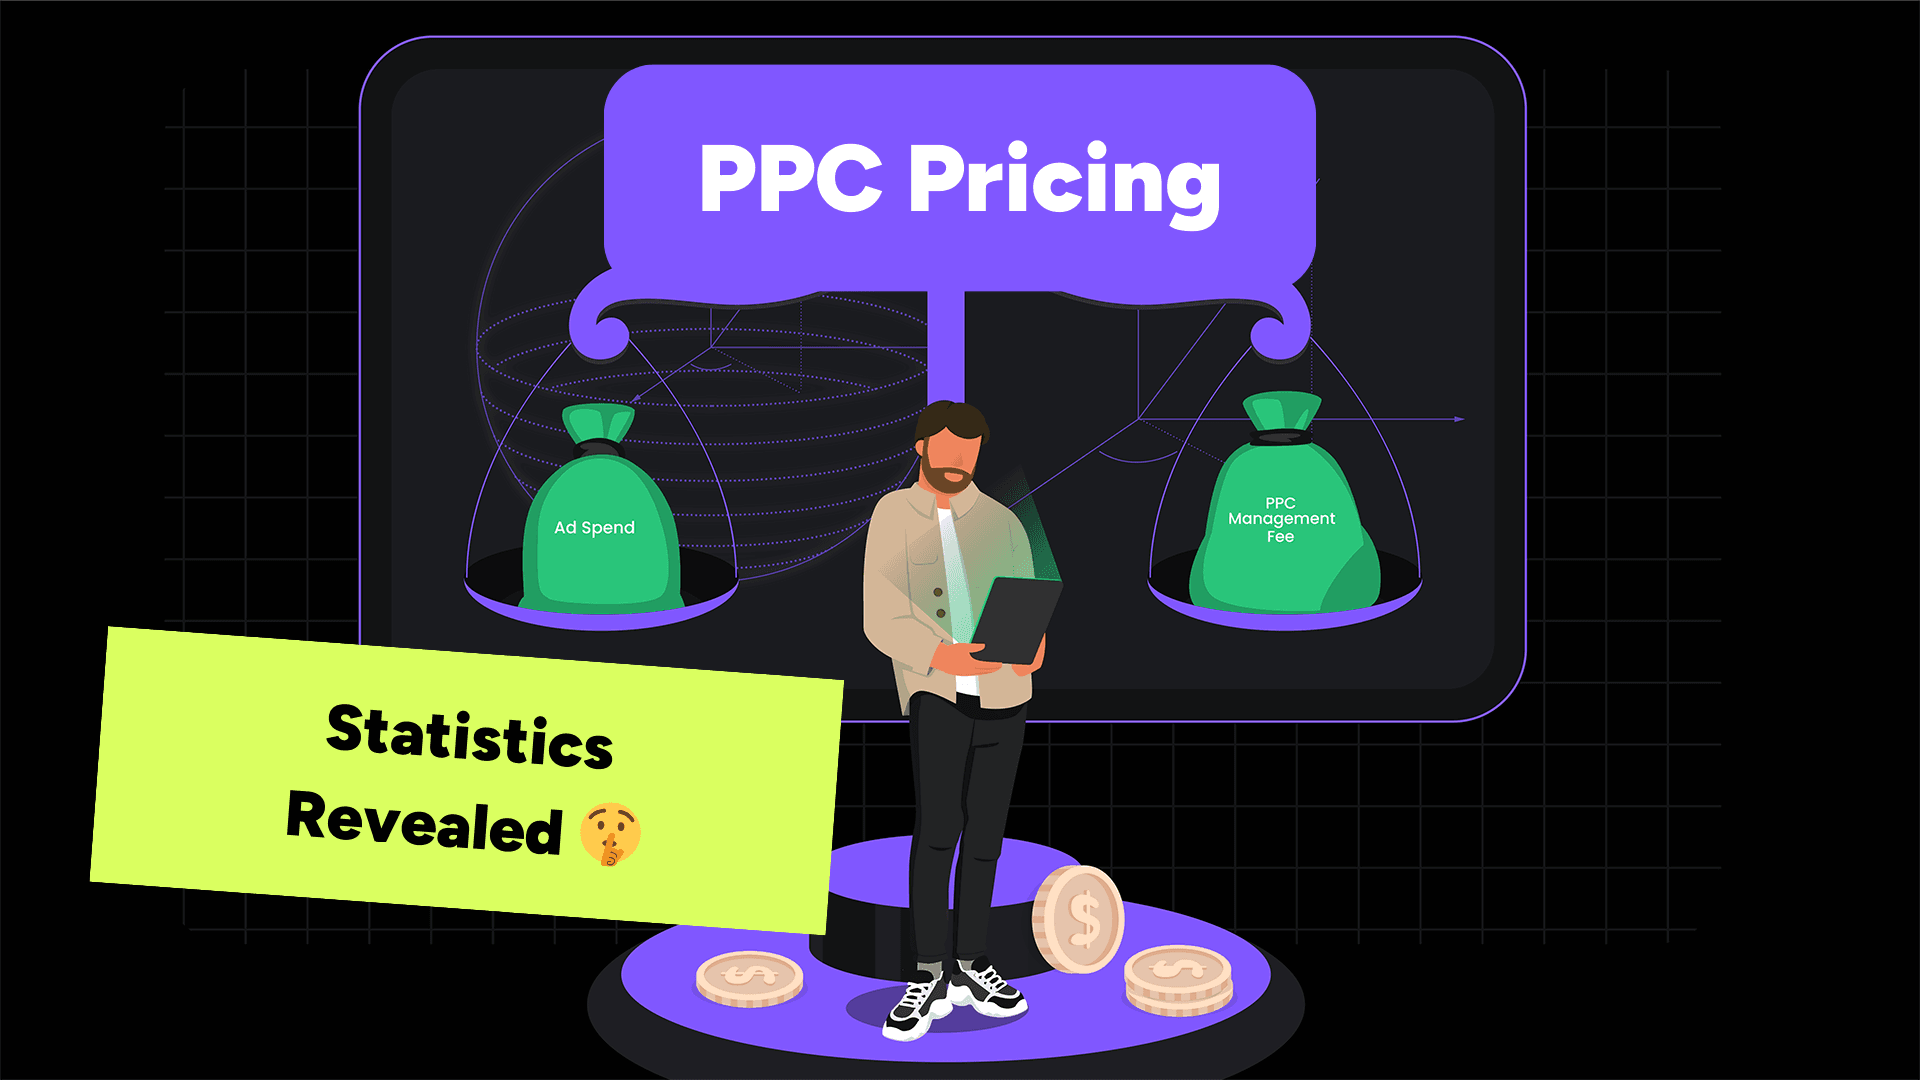 PPC Pricing statistics revealed 